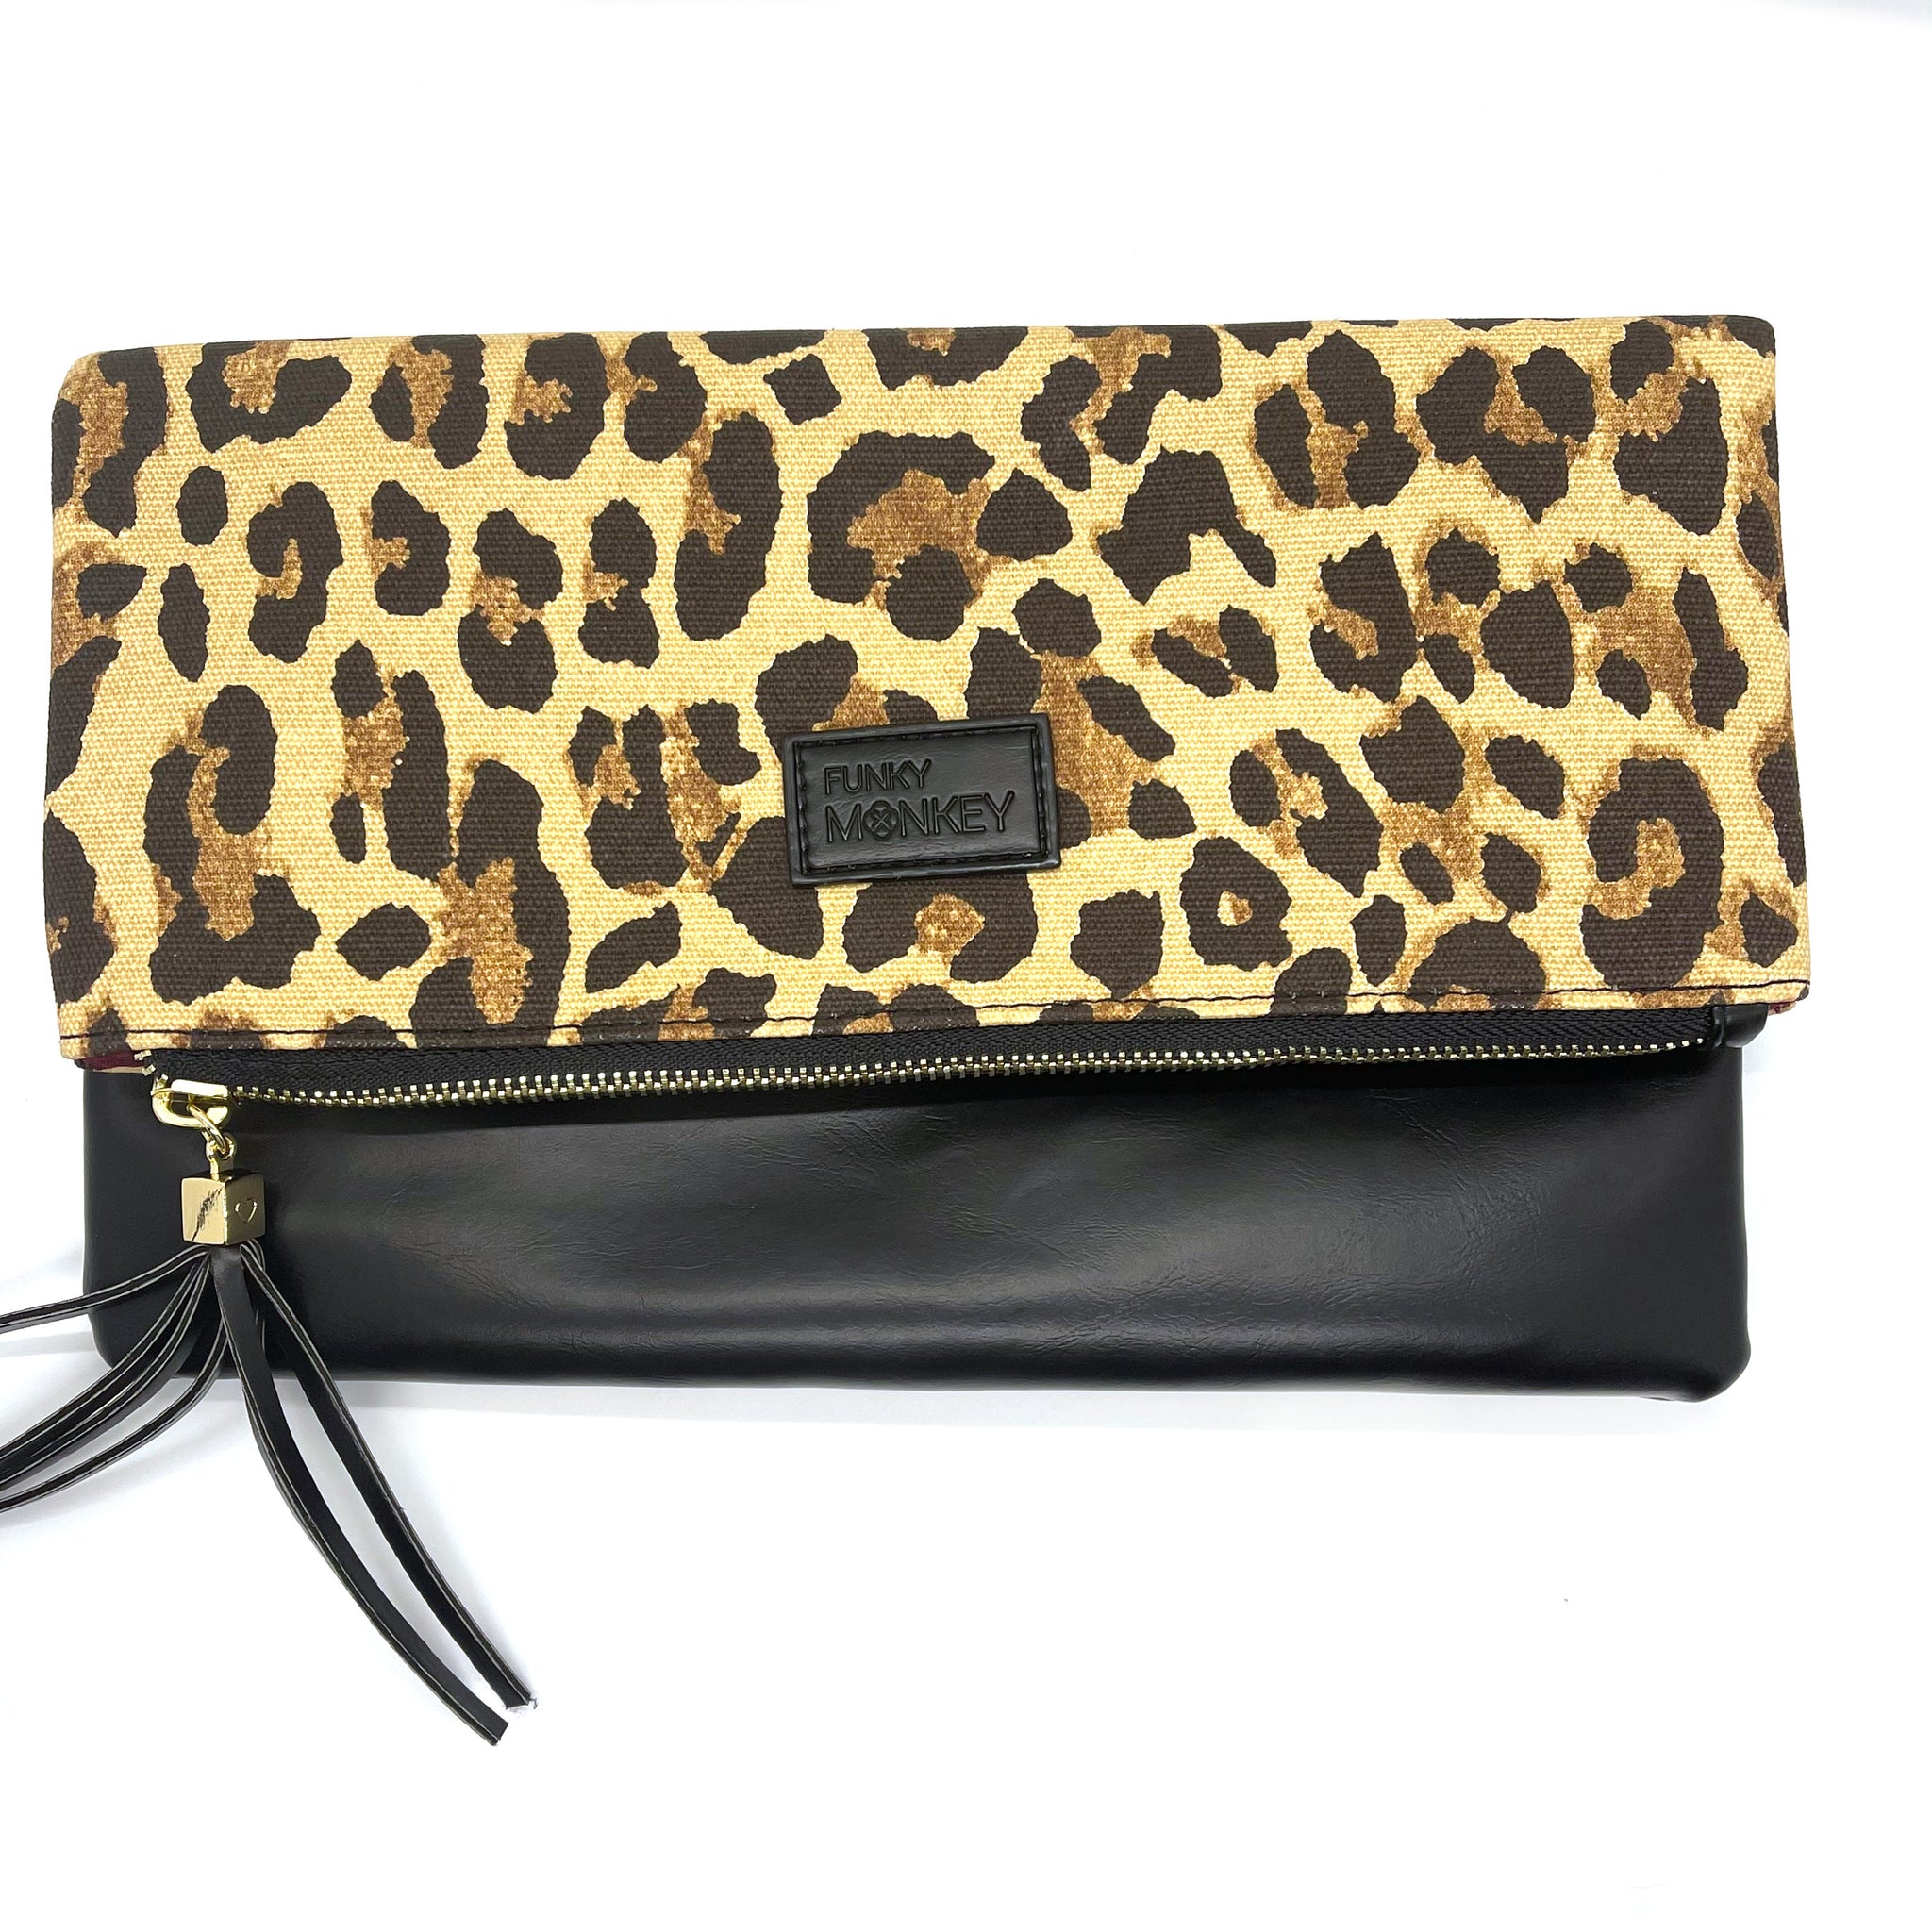 animal print purse, leopard print purse, foldover cluth, animal print clutch, clutch purse, animal print handbag, leopard print handbag, small purse, fashion purse